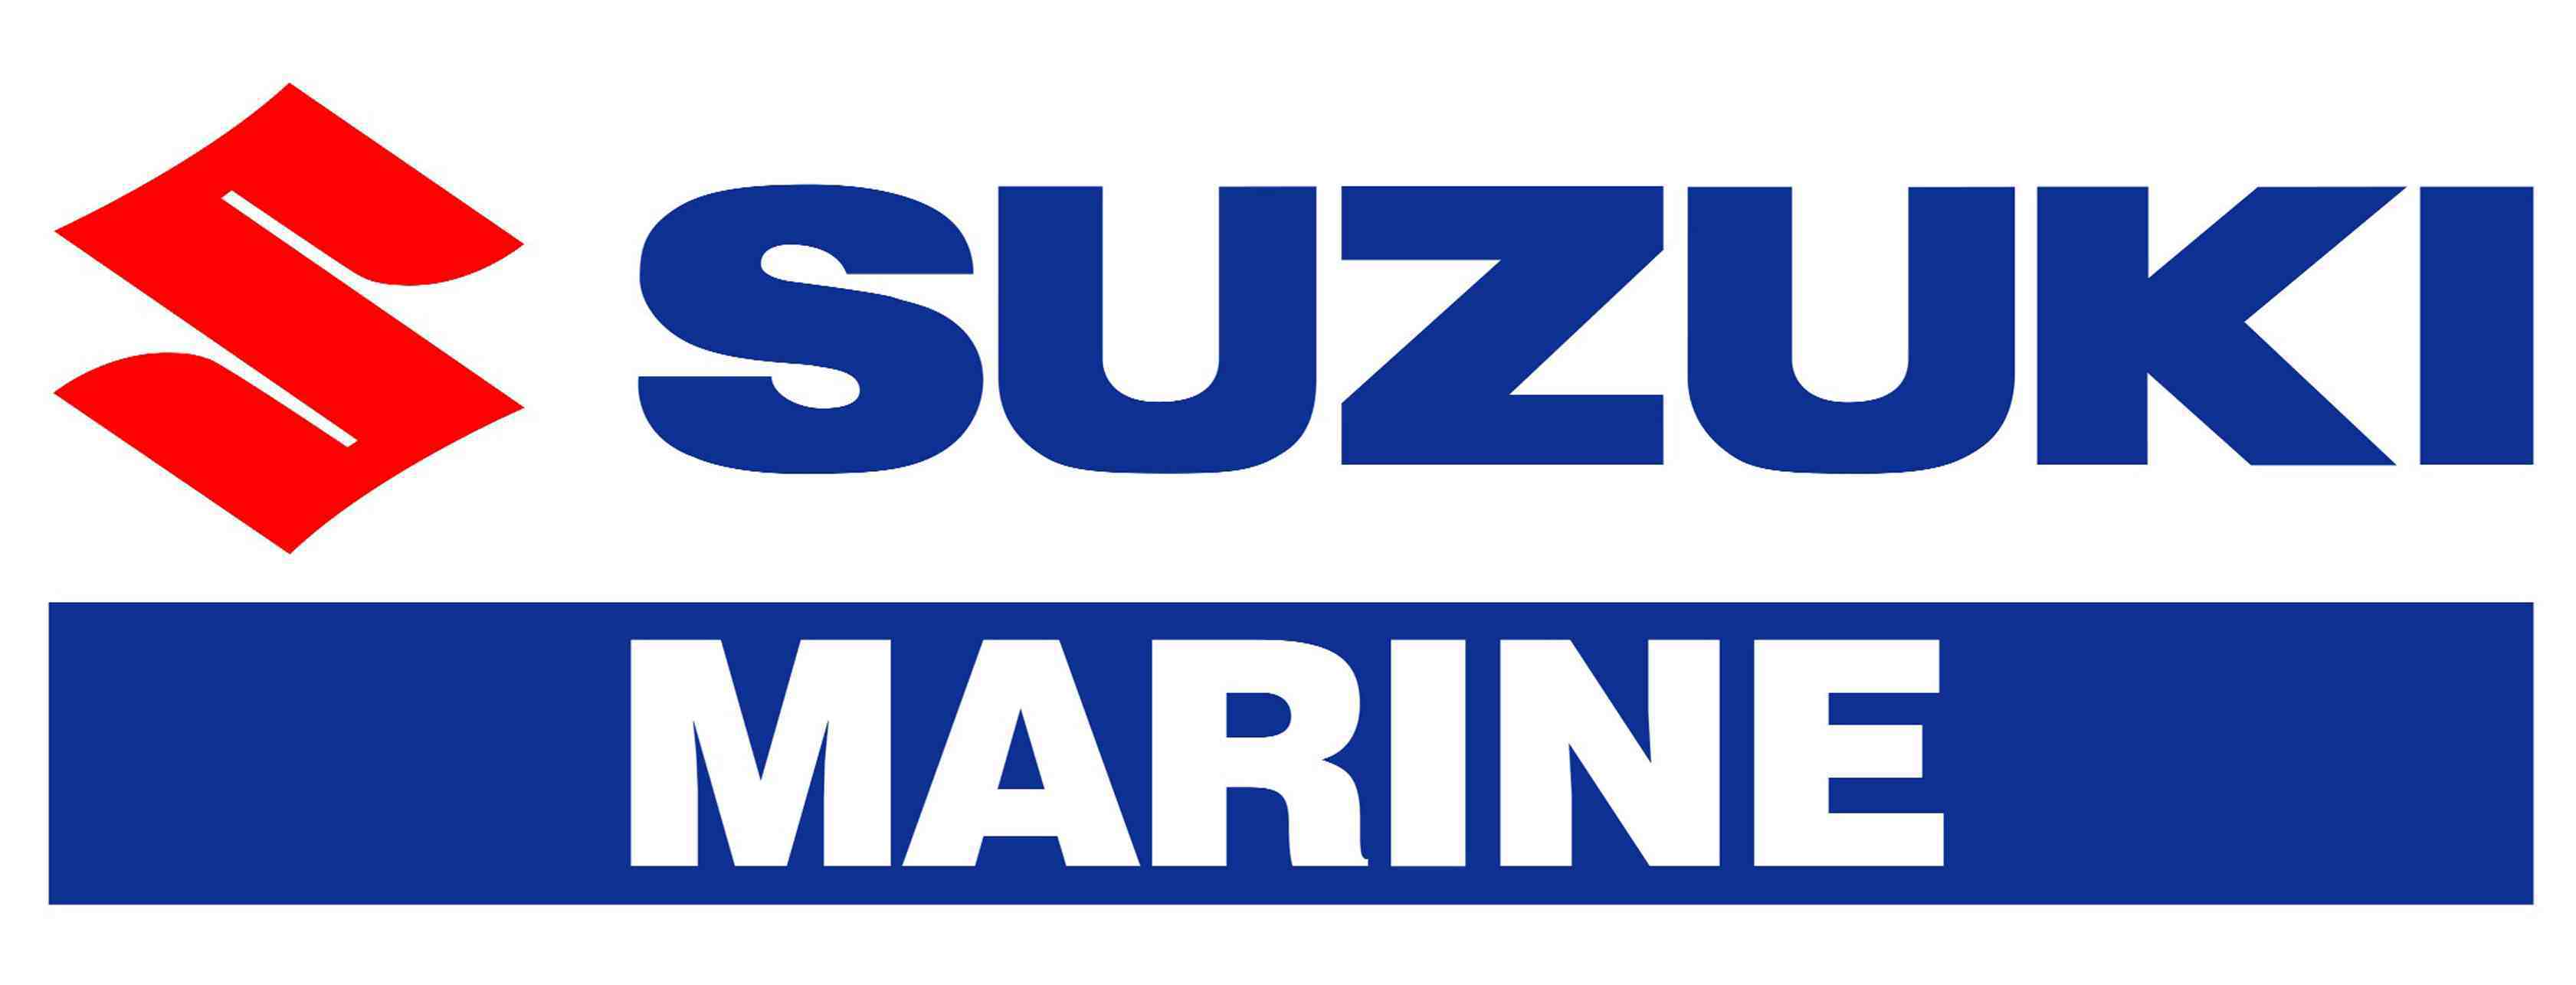 Suzuki Marine.jpg